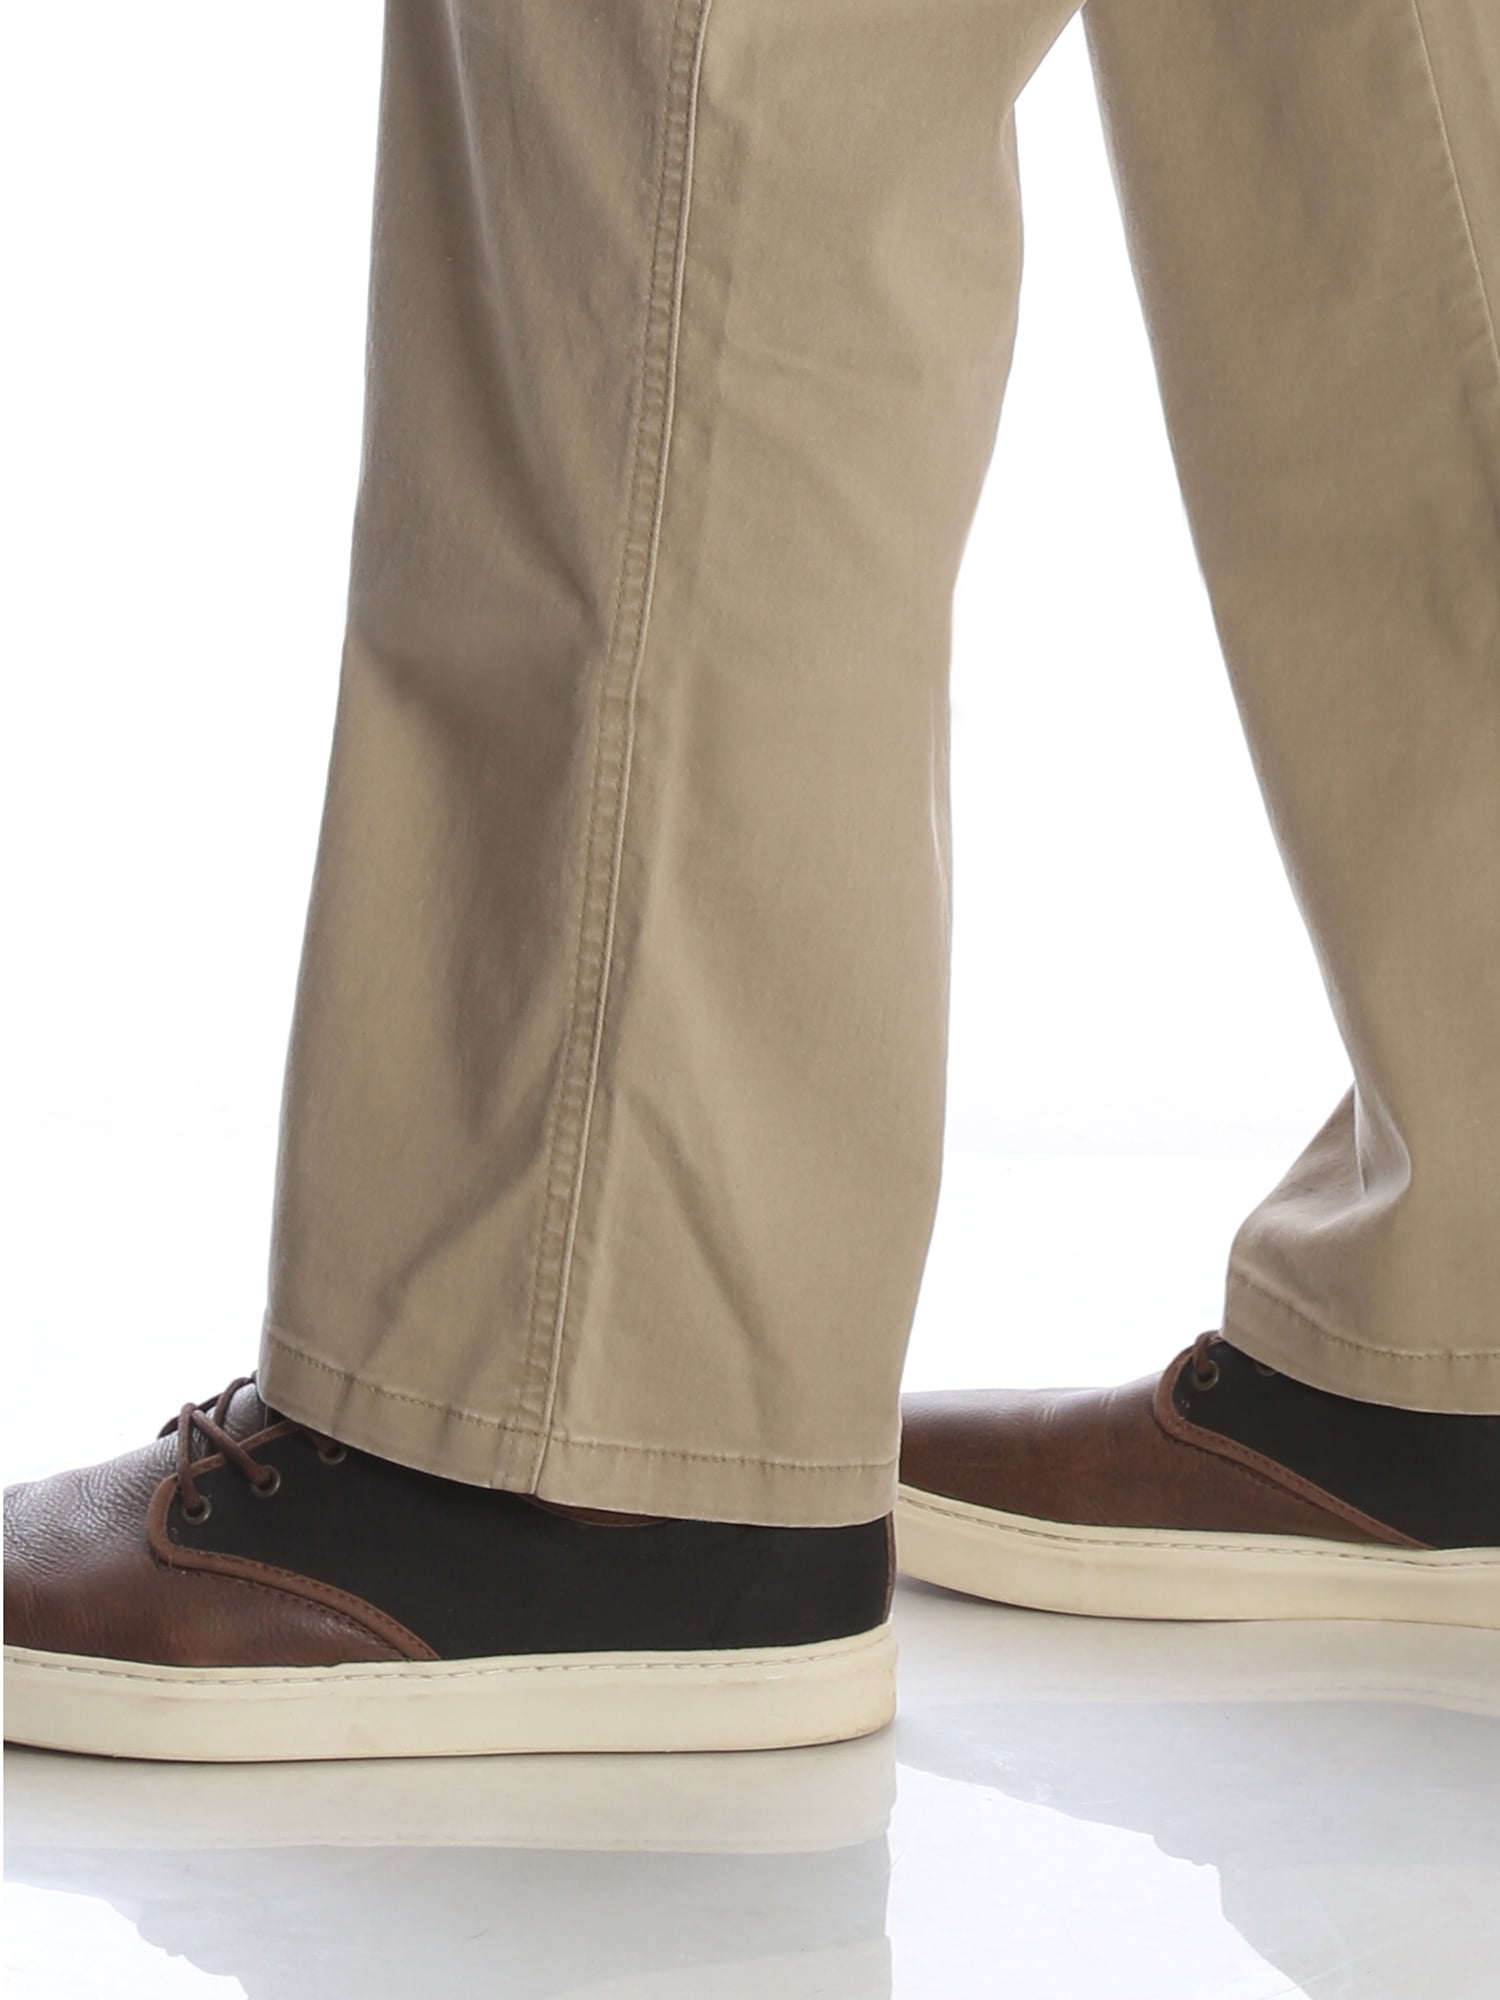 WRANGLER COMFORT SERIES Stretch Light Brown Pants 67CS4SB 34x30 Excellent  $10.95 - PicClick